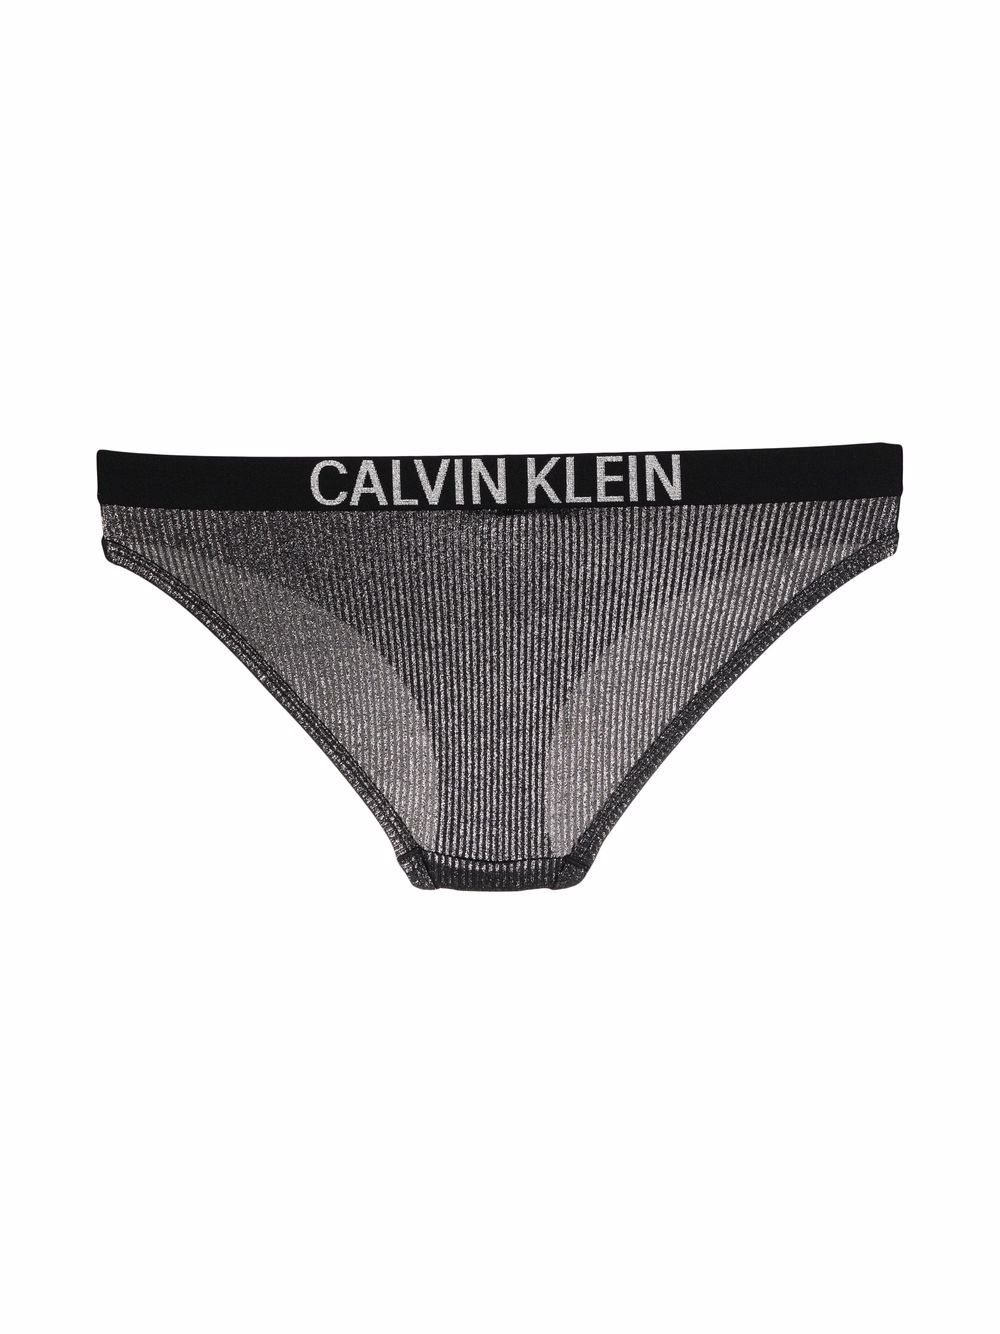 фото Calvin klein плавки бикини с логотипом на поясе